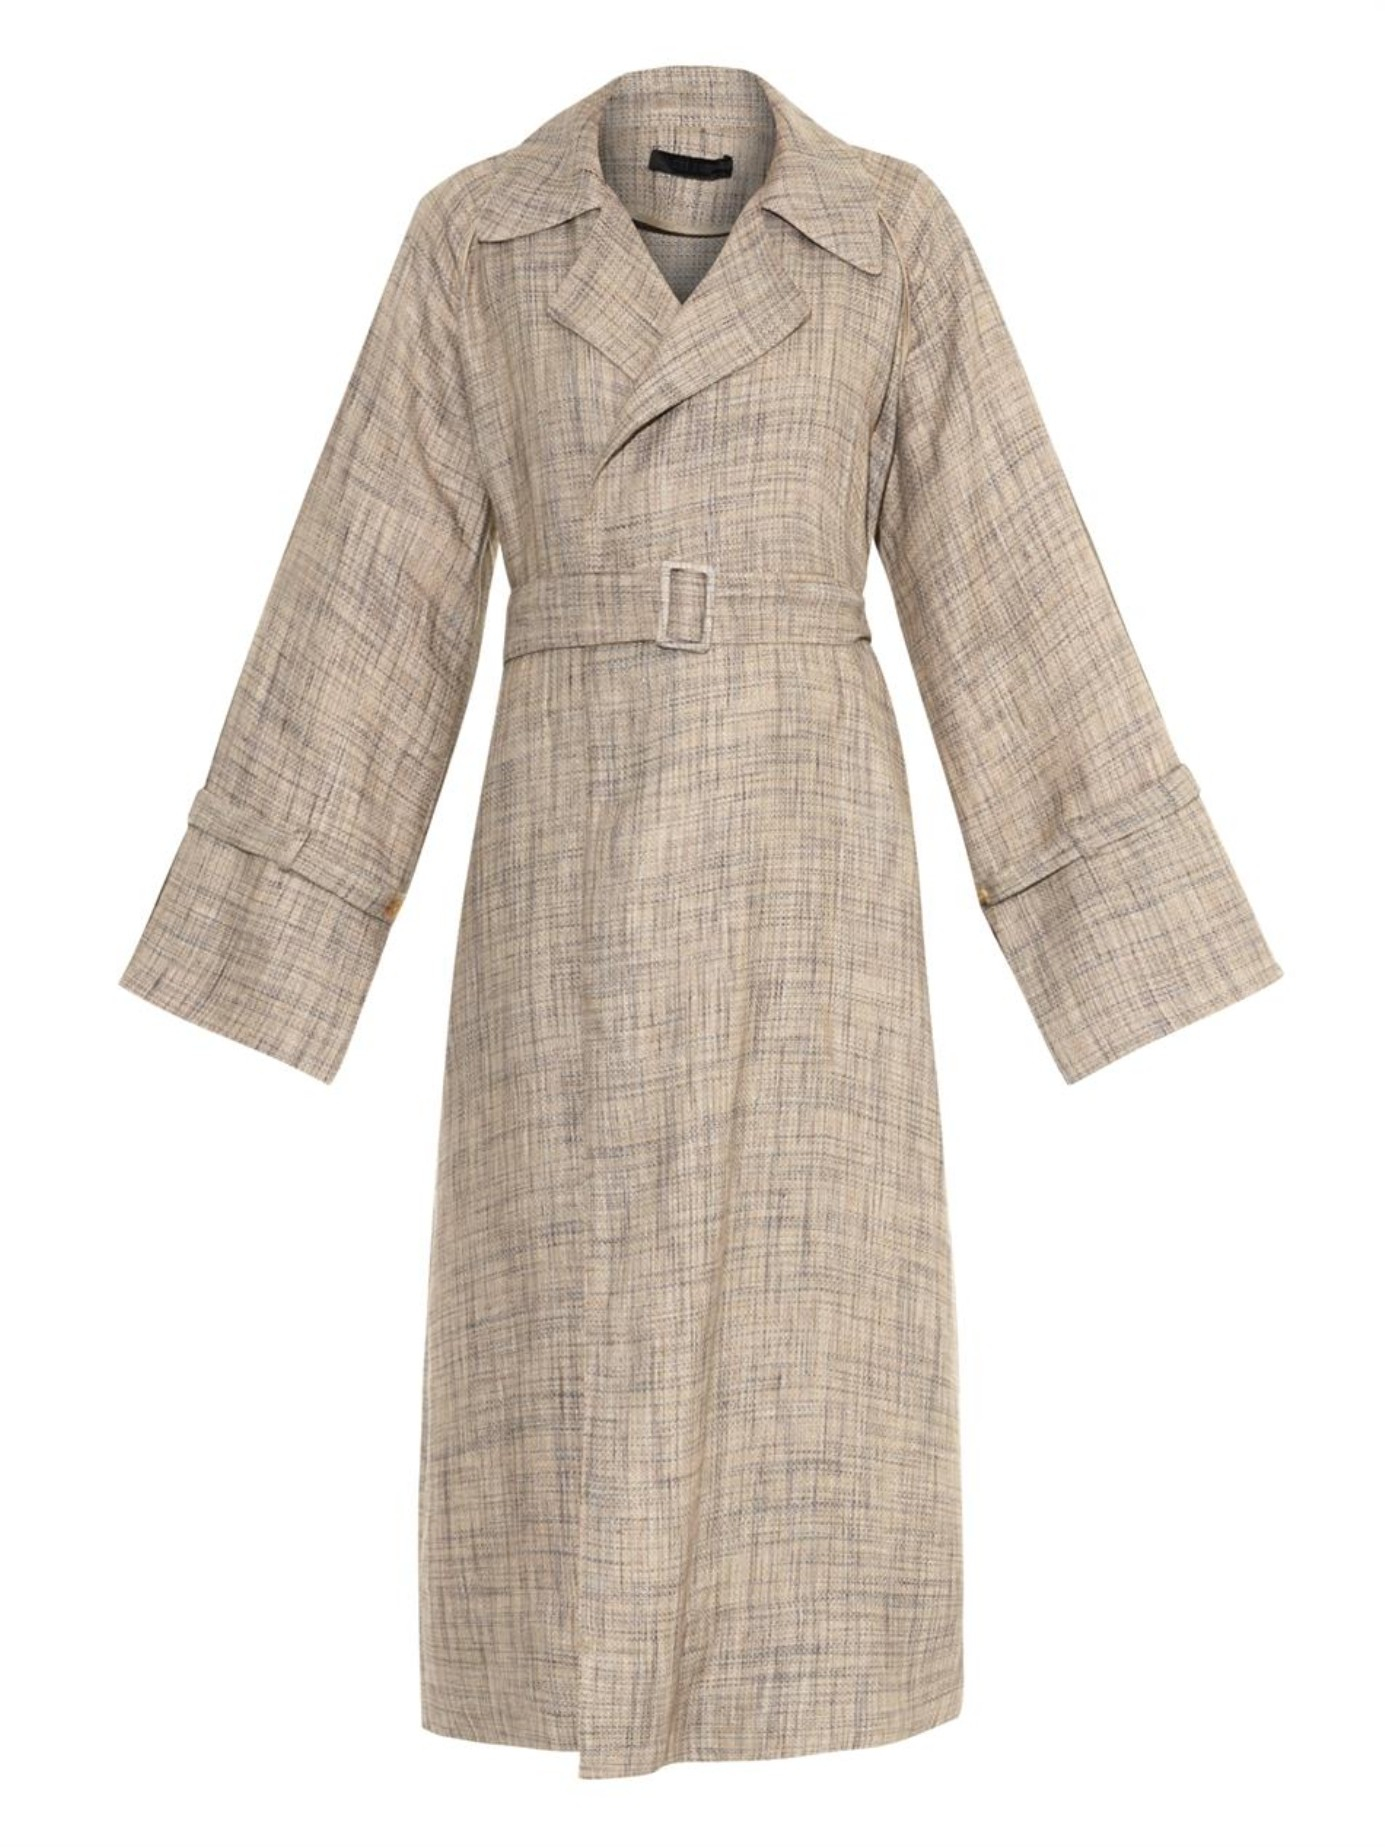 Lyst - The Row Lana Linen Trench Coat in Gray